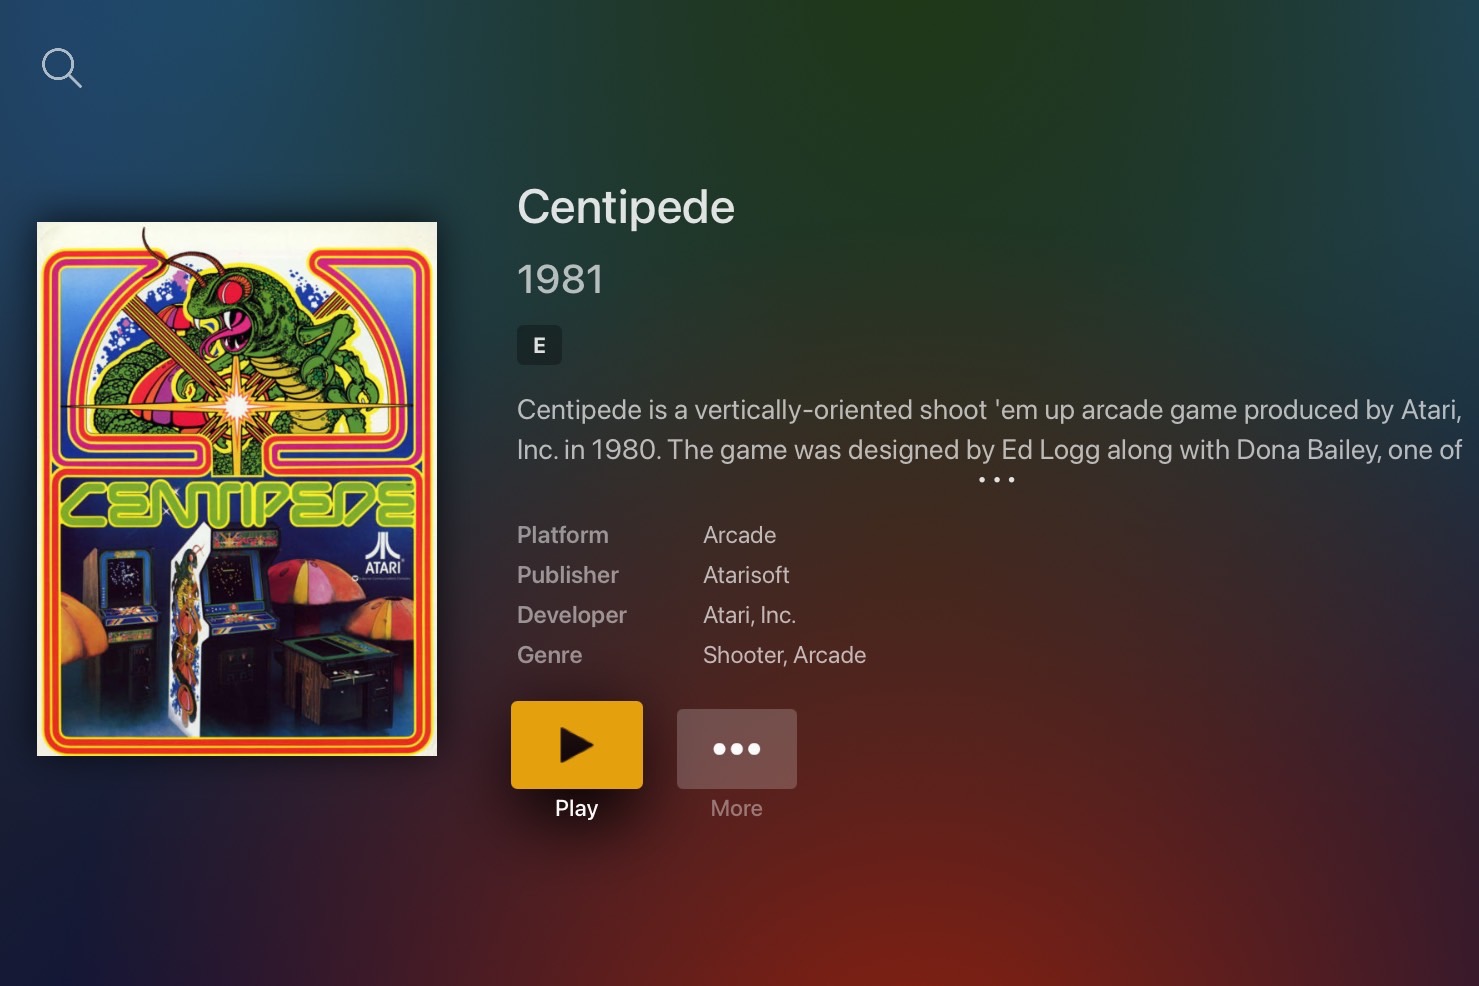 Plex Arcade Library pre-play screen for Centipede